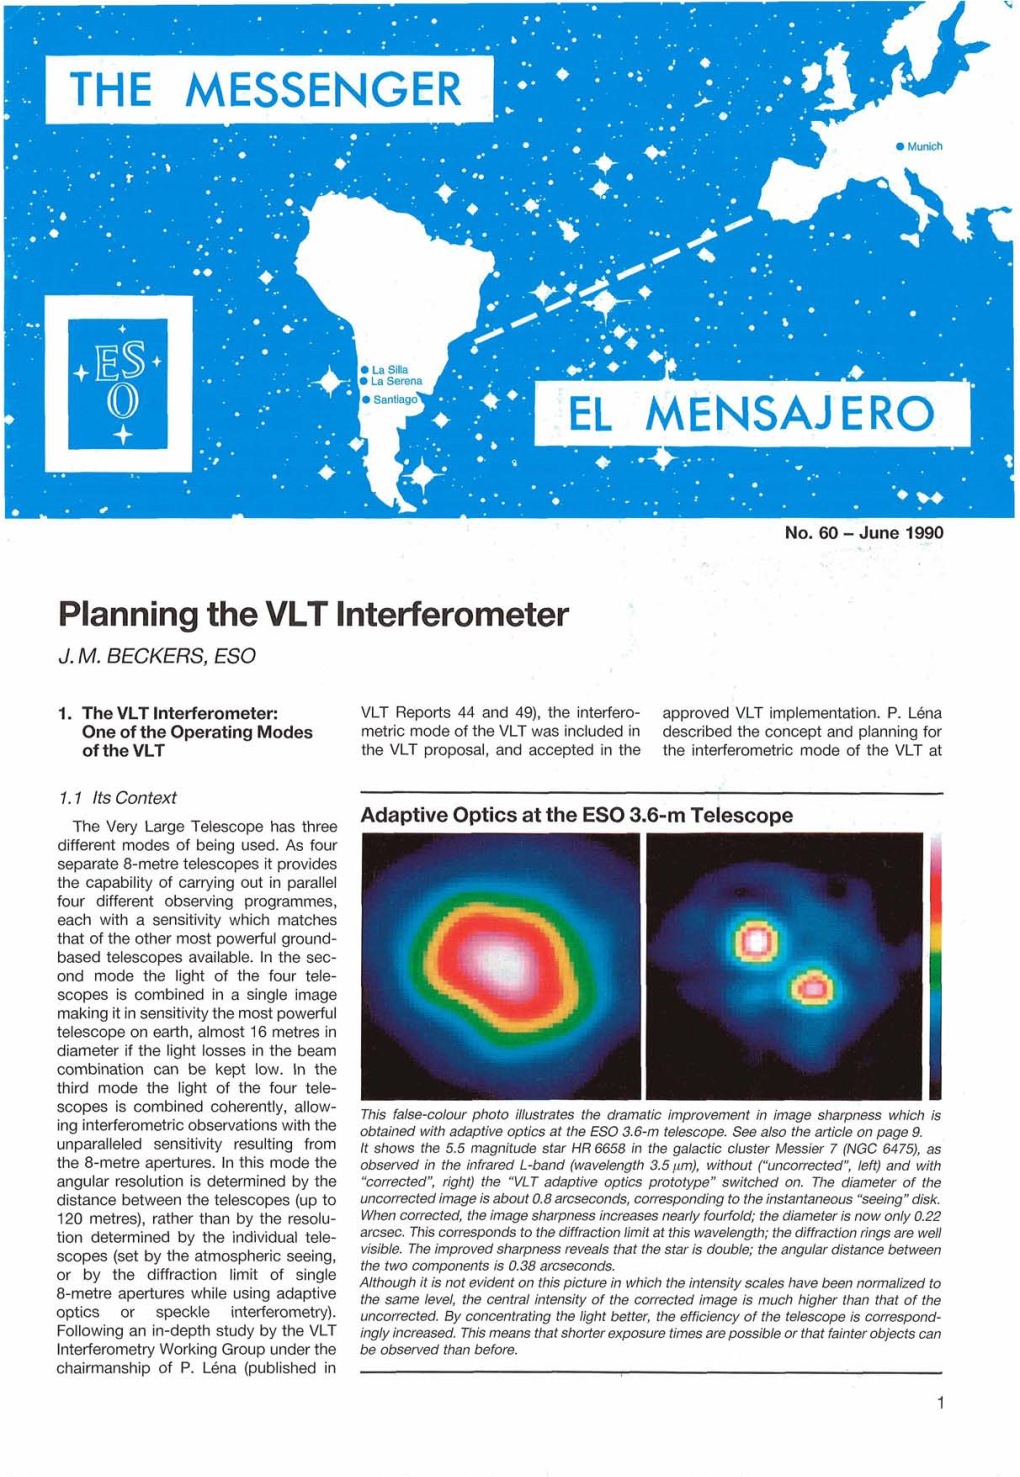 Planning the VLT Interferometer